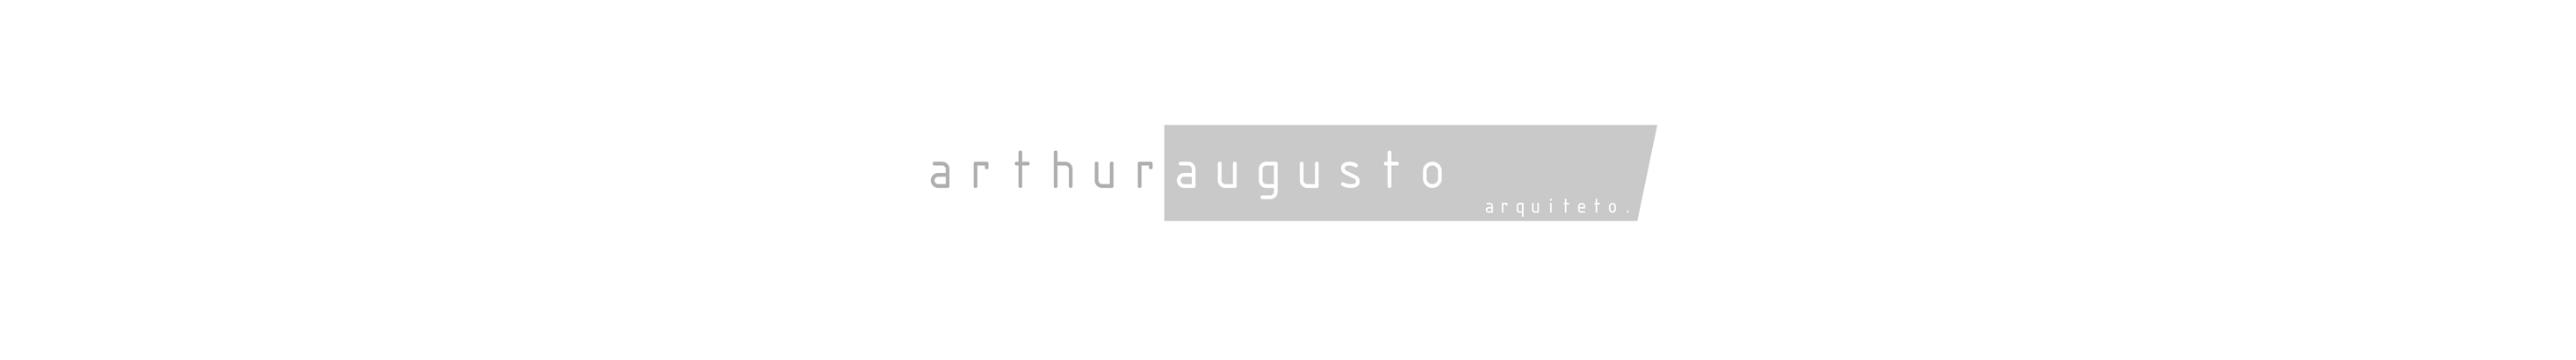 Arthur Augusto Arquitetos profilbanner